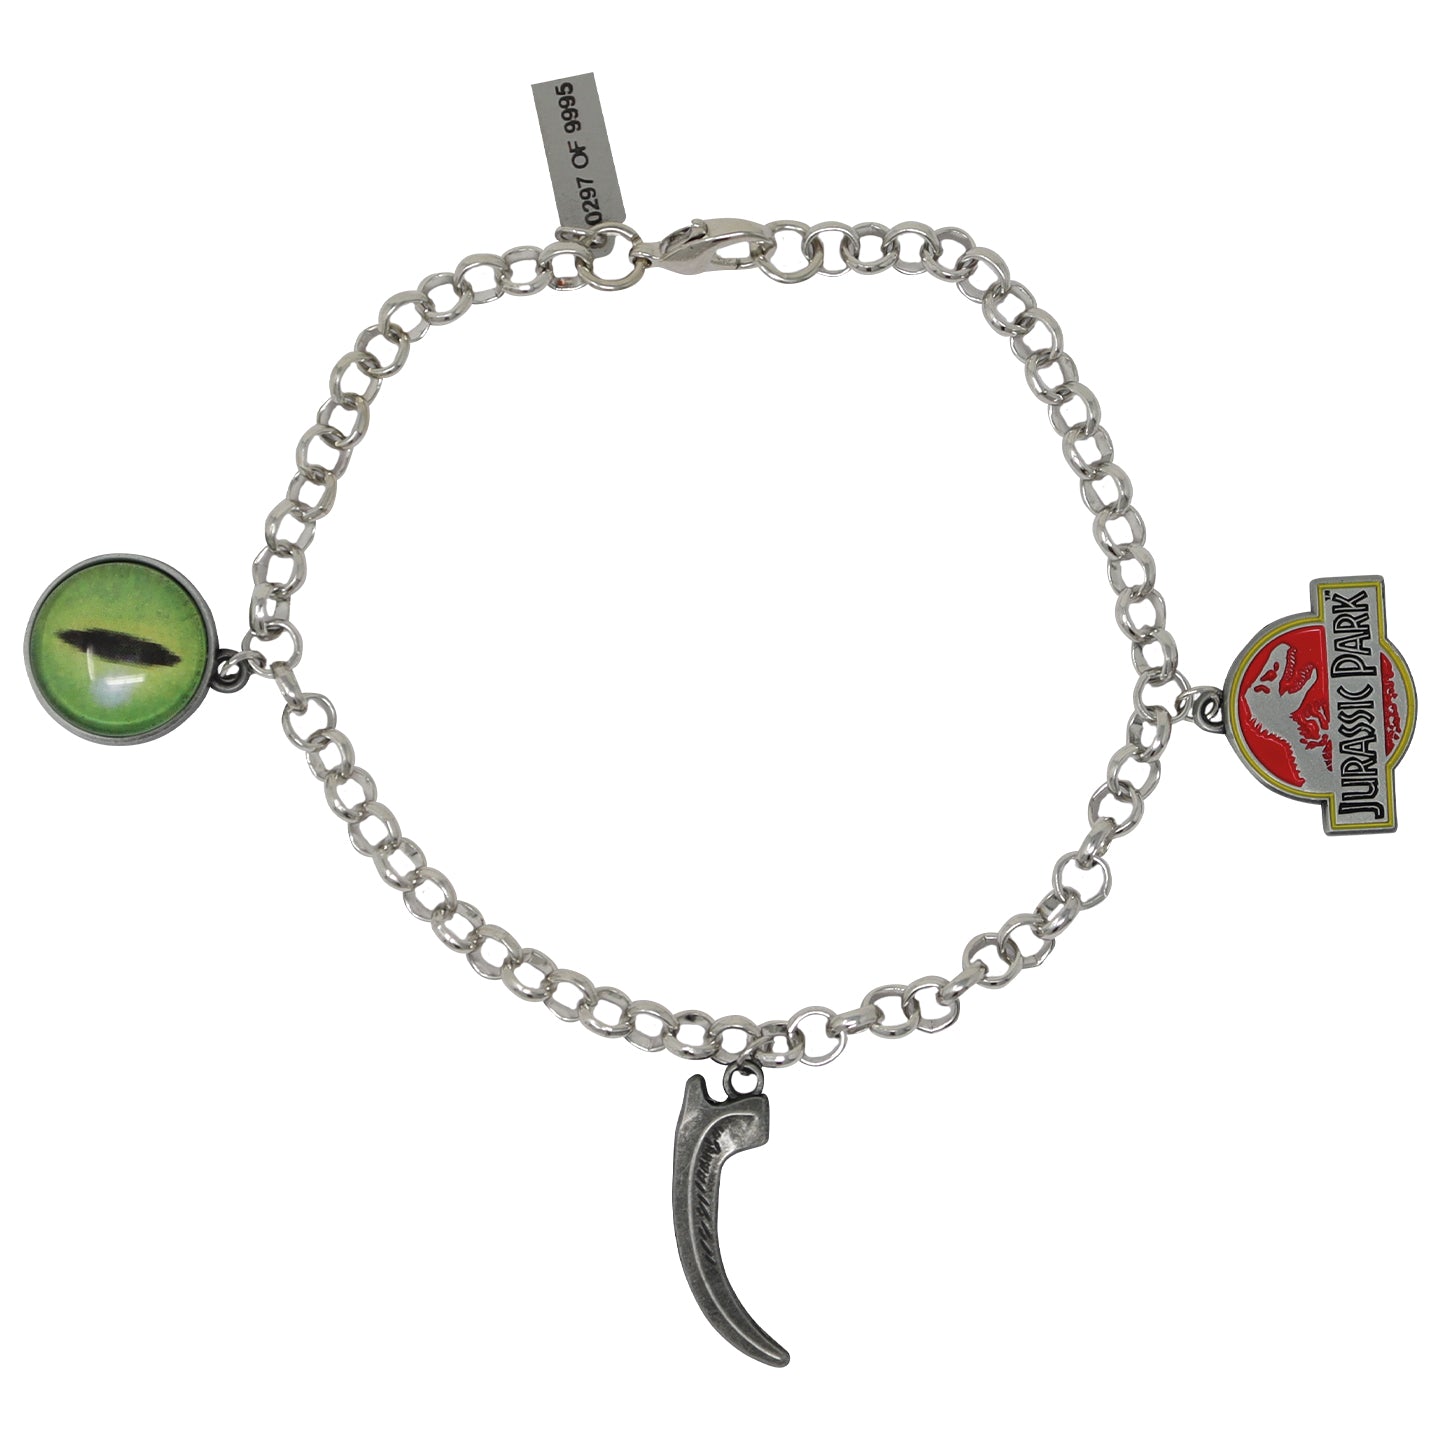 Jurassic Park Limited Edition Charm Bracelet